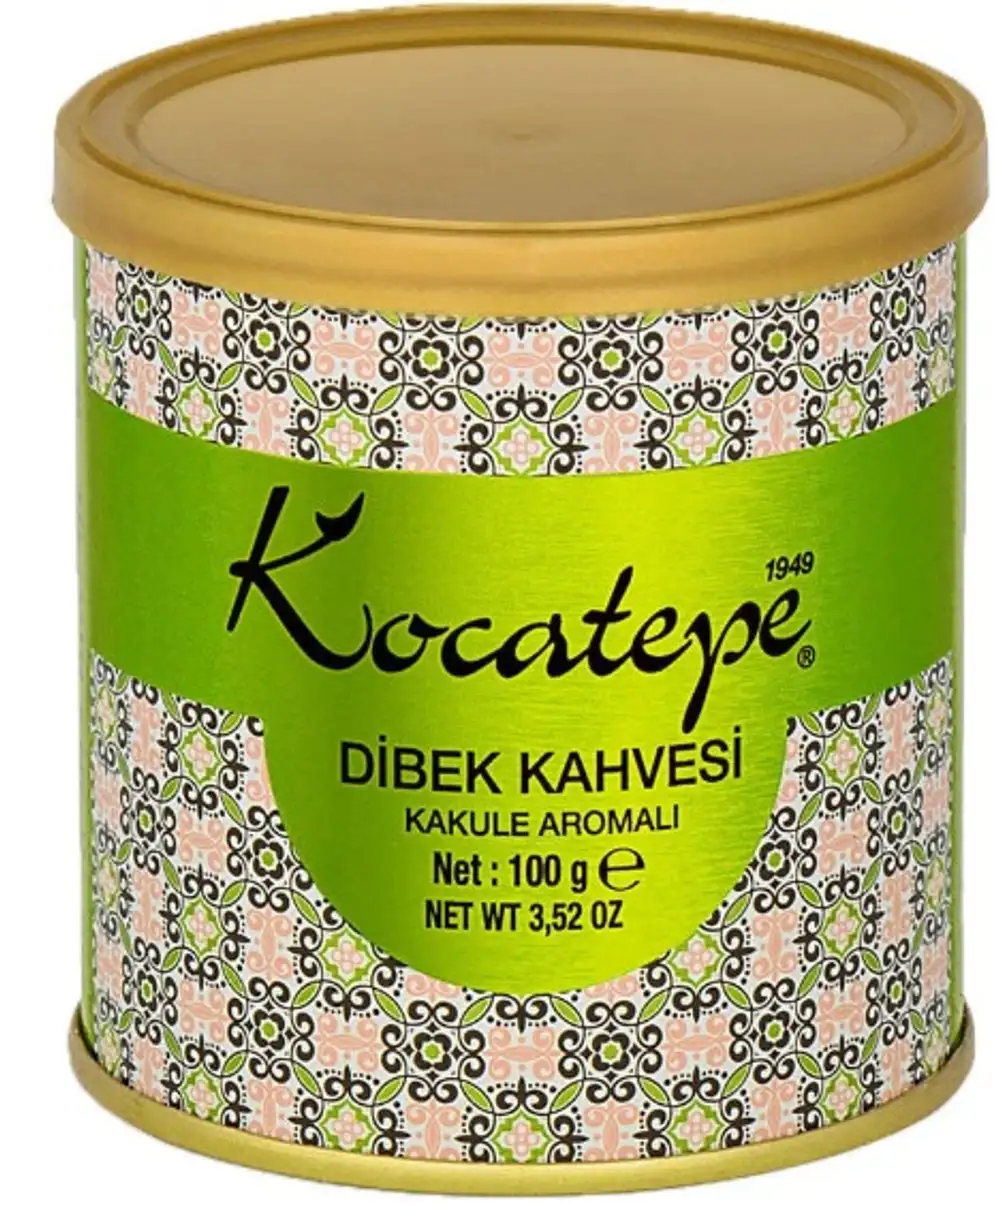 Türk Kahvesi - Kocatepe Kakuleli Dibek Kahvesi 100 gr.